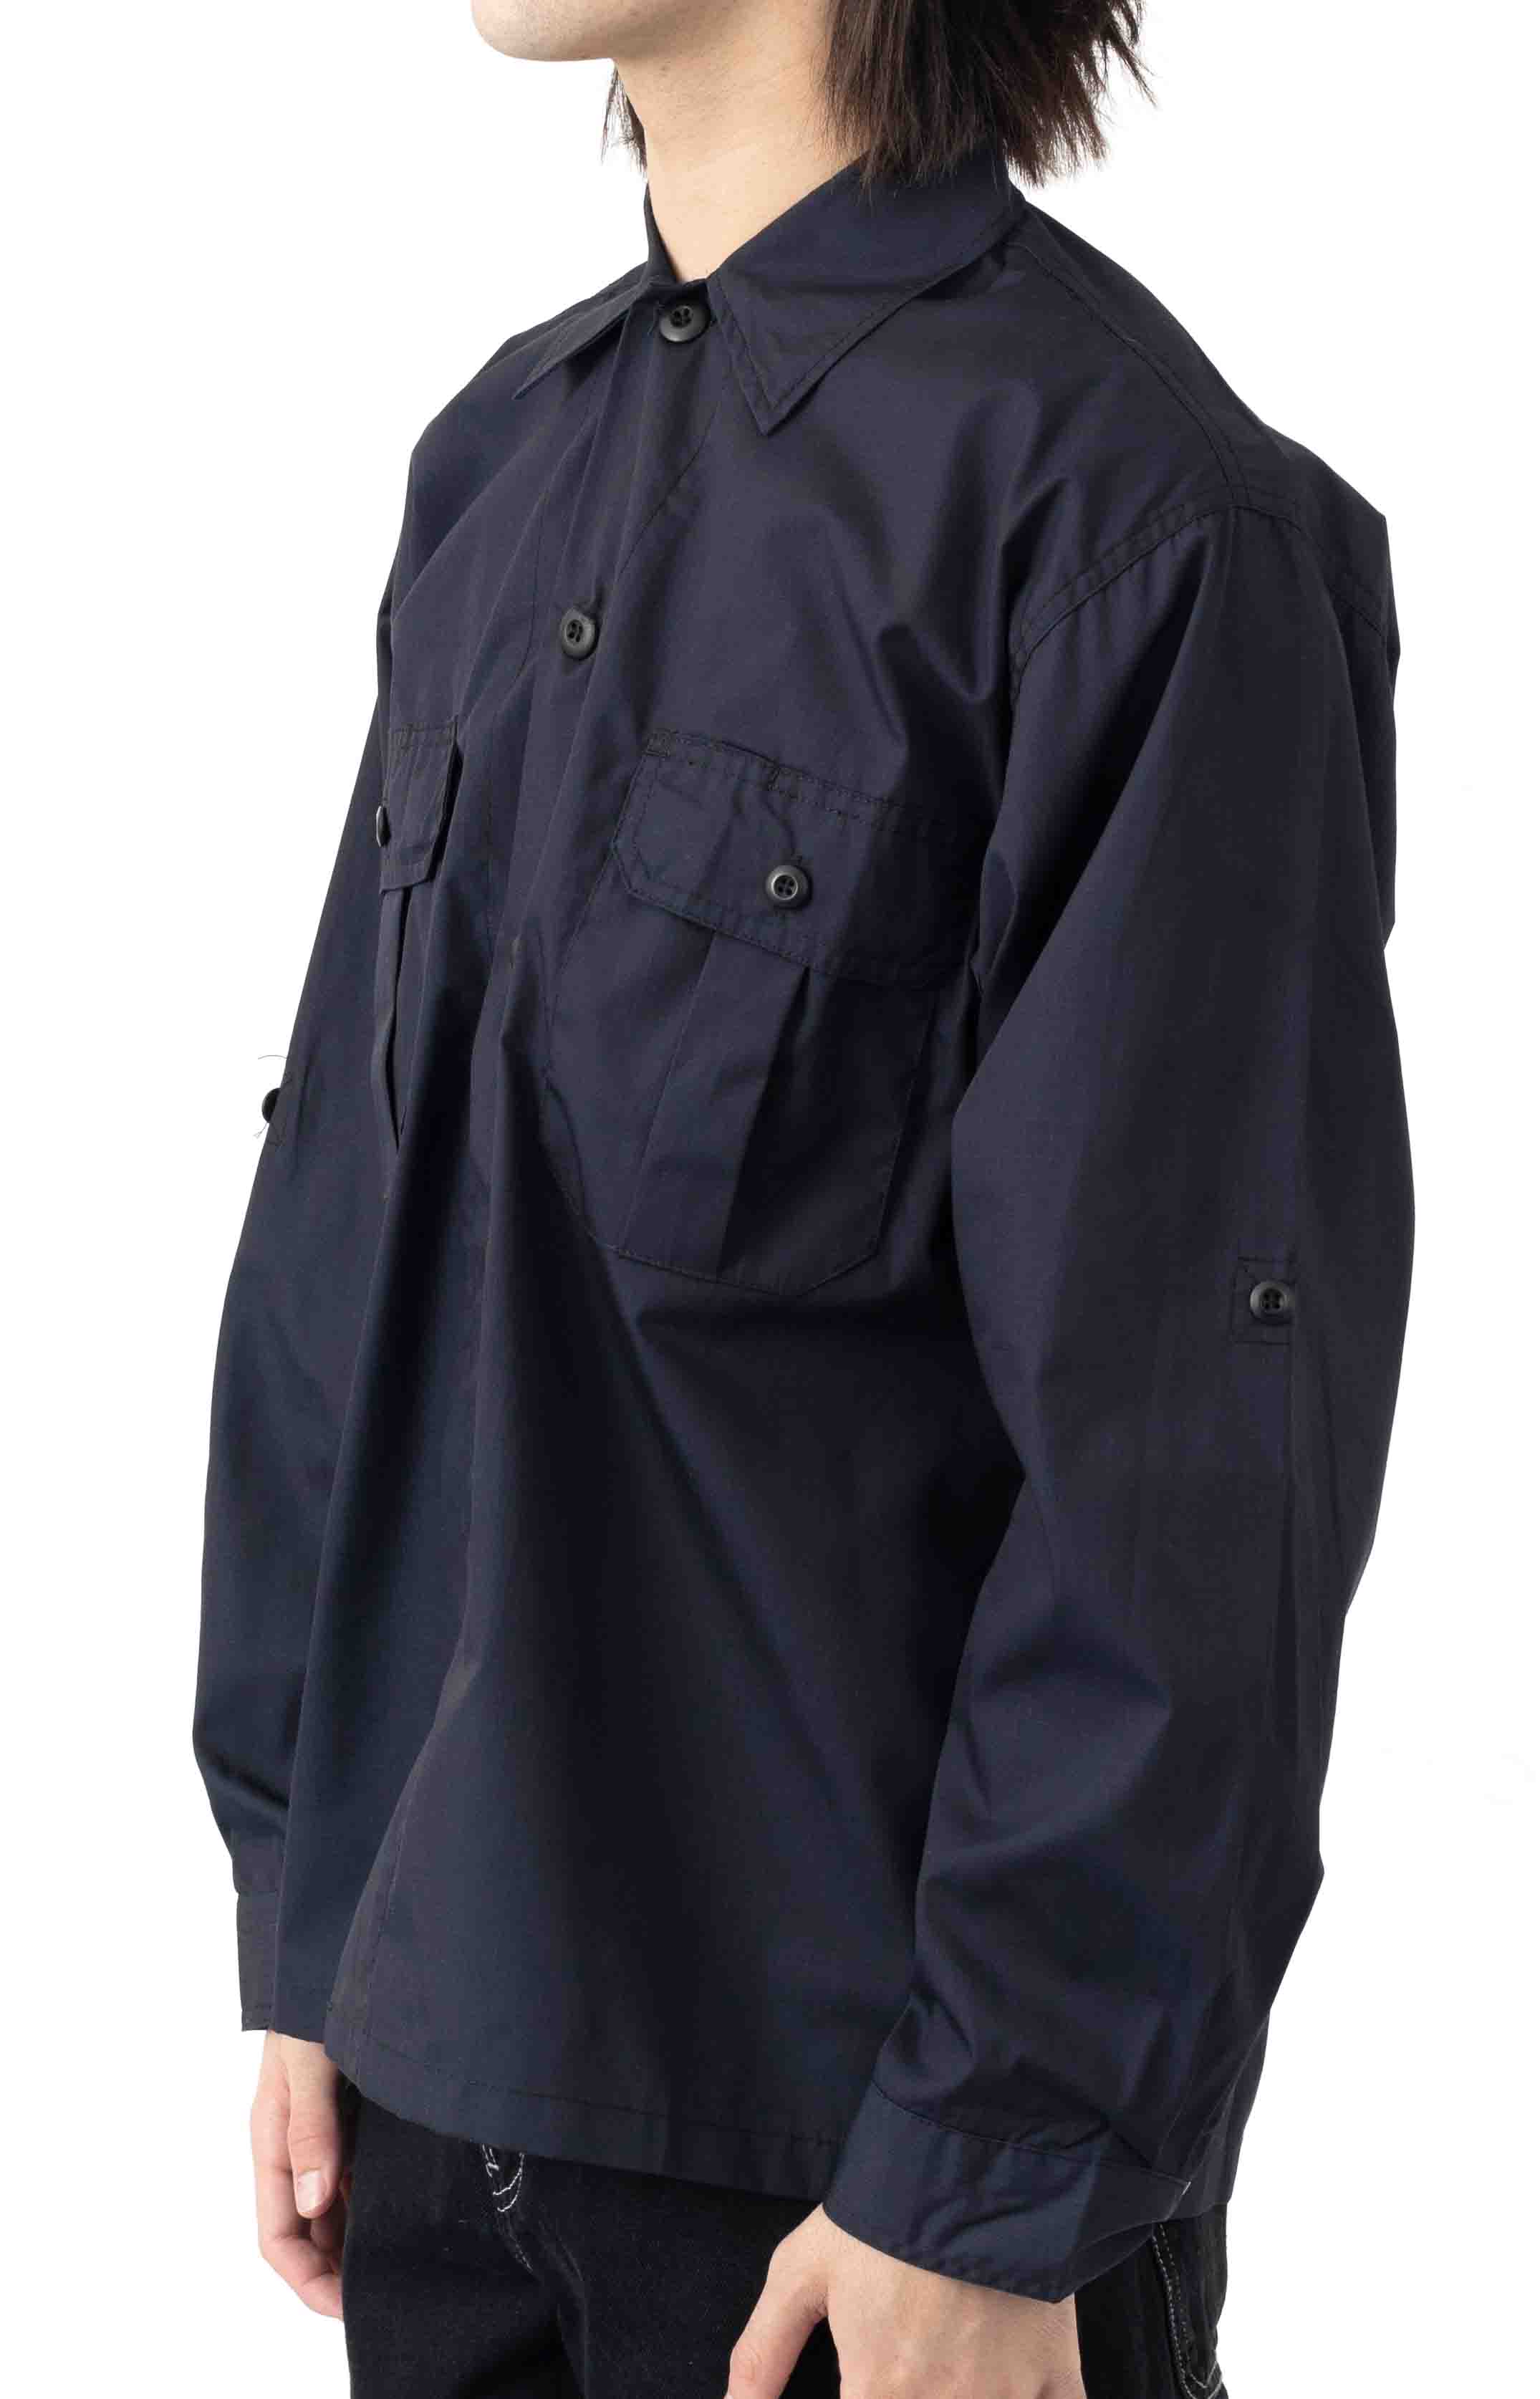 (10735) Rothco Lightweight Tactical Shirt - Midnight Navy Blue